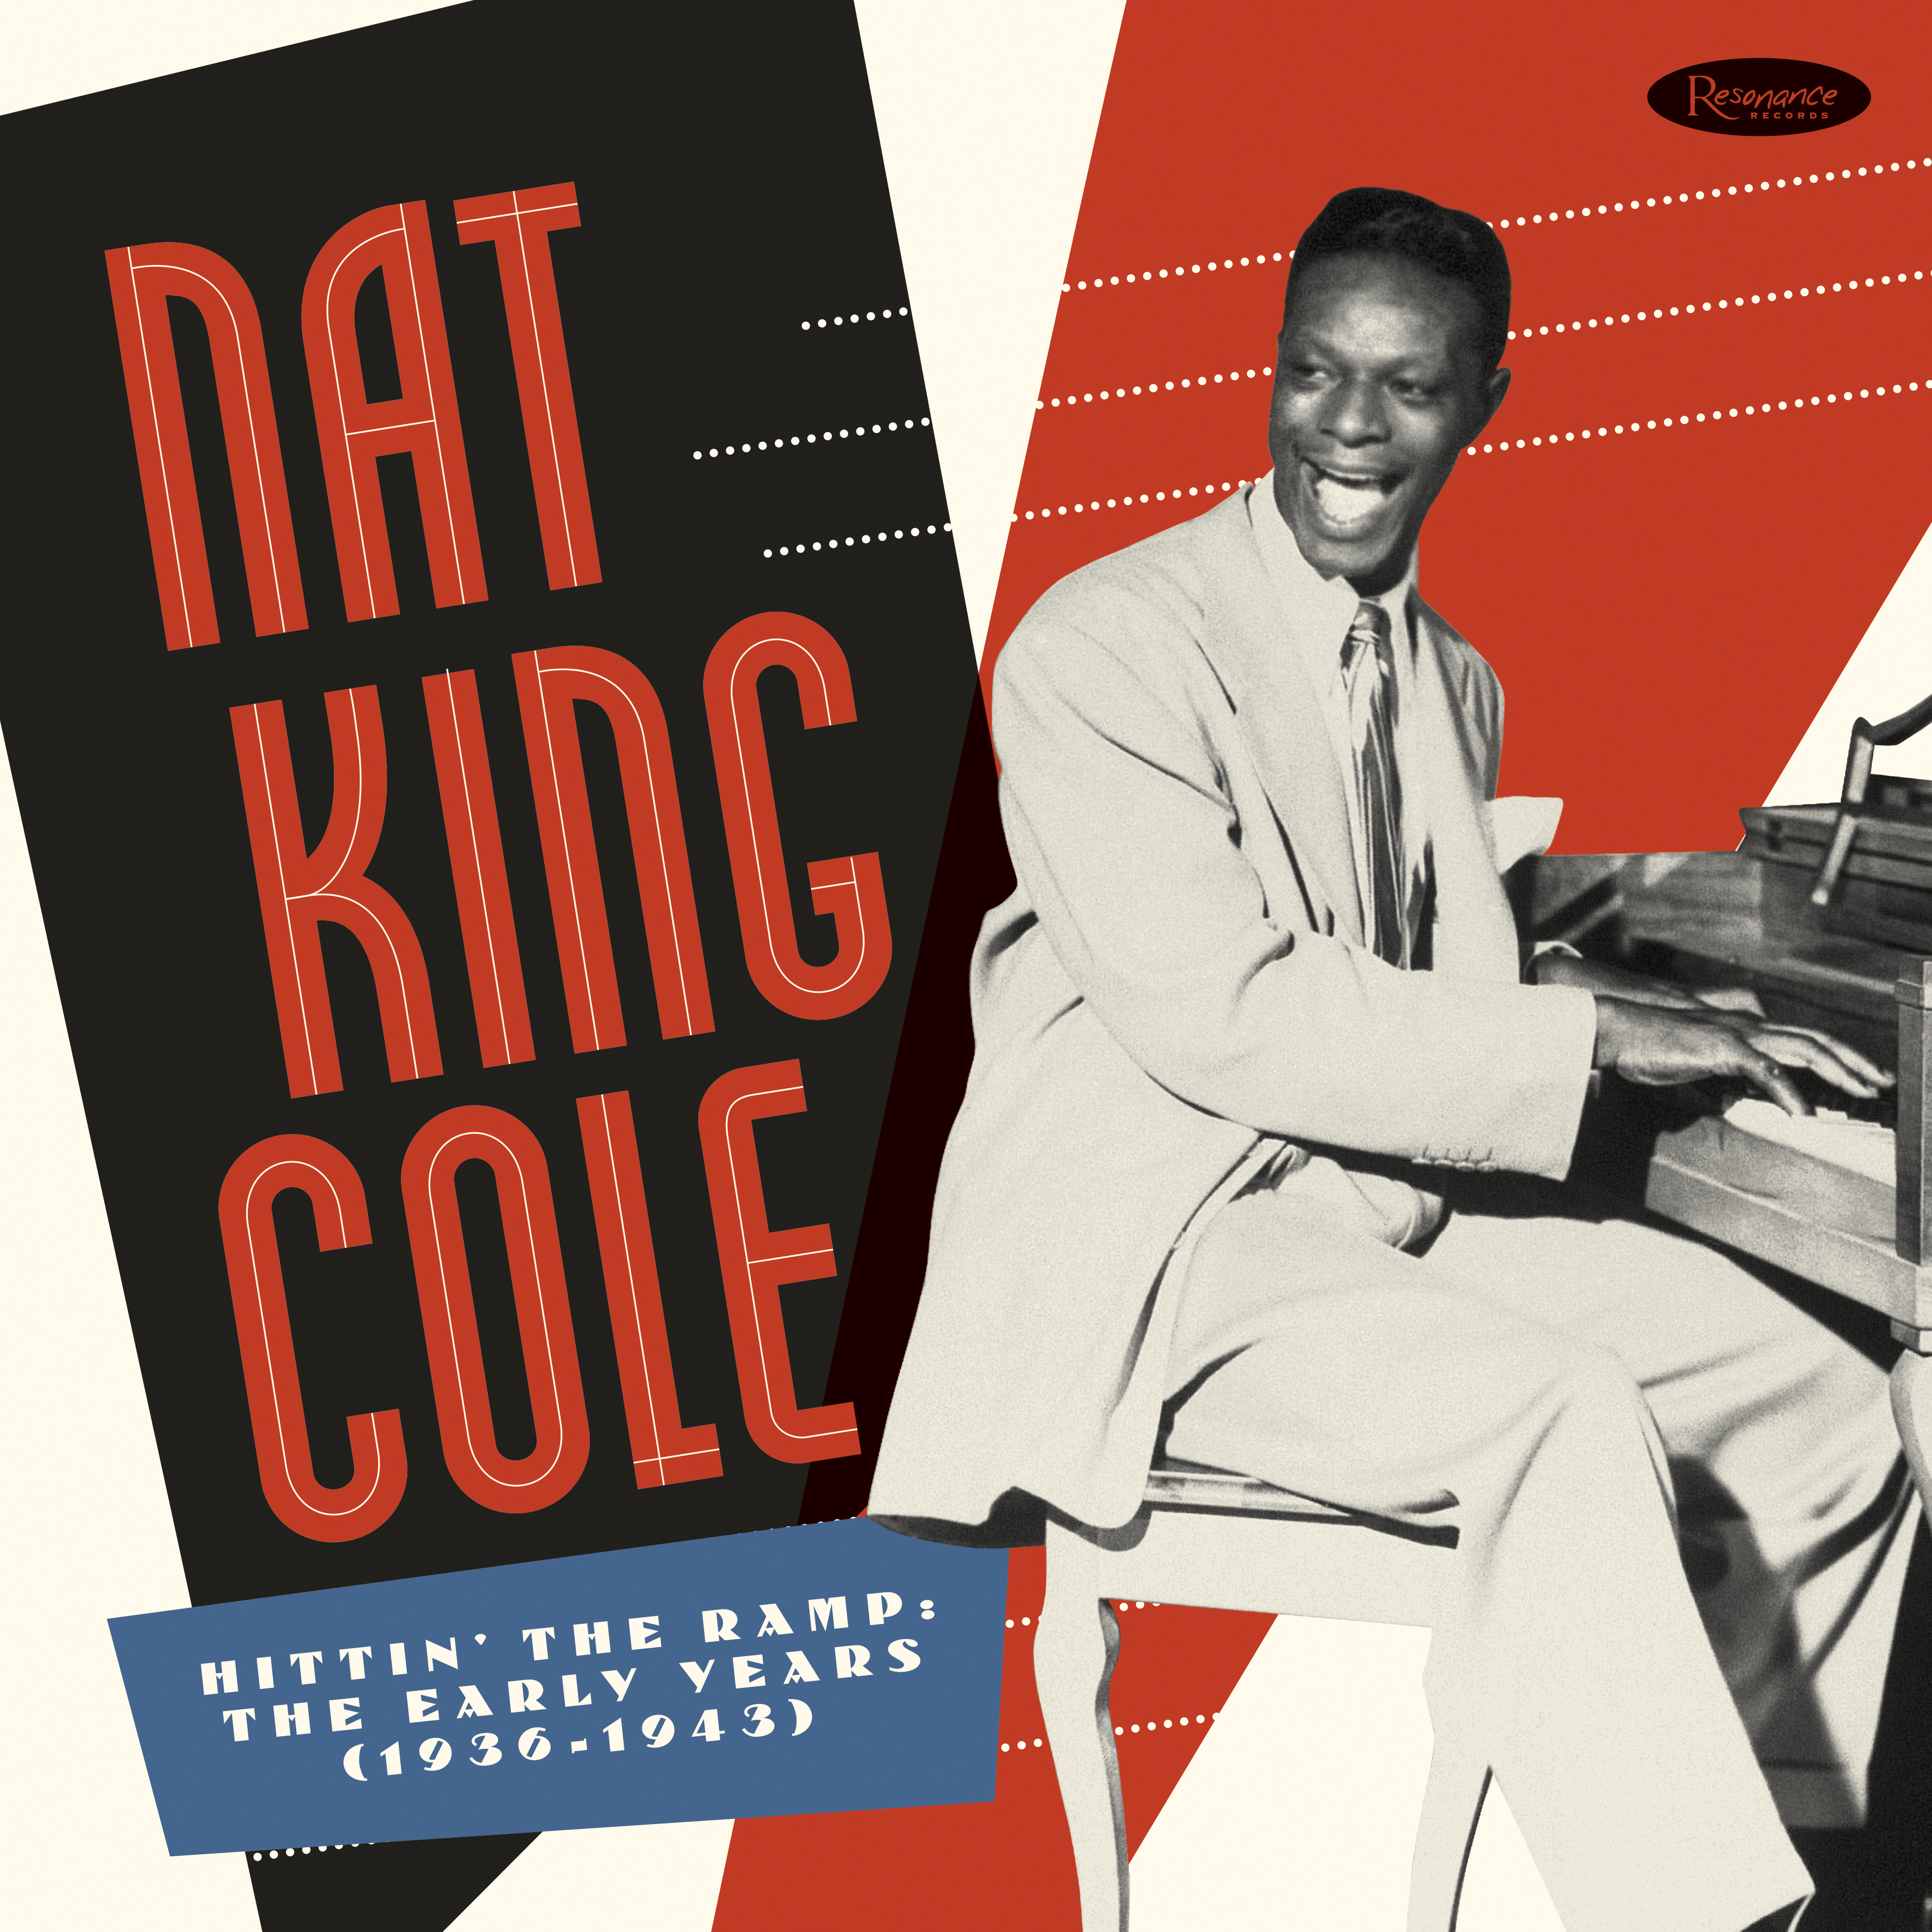 Nat King Cole Hittin' The Ramp: The Early Years (1936-1943) [7 CD BOX SET]  | Resonance Records